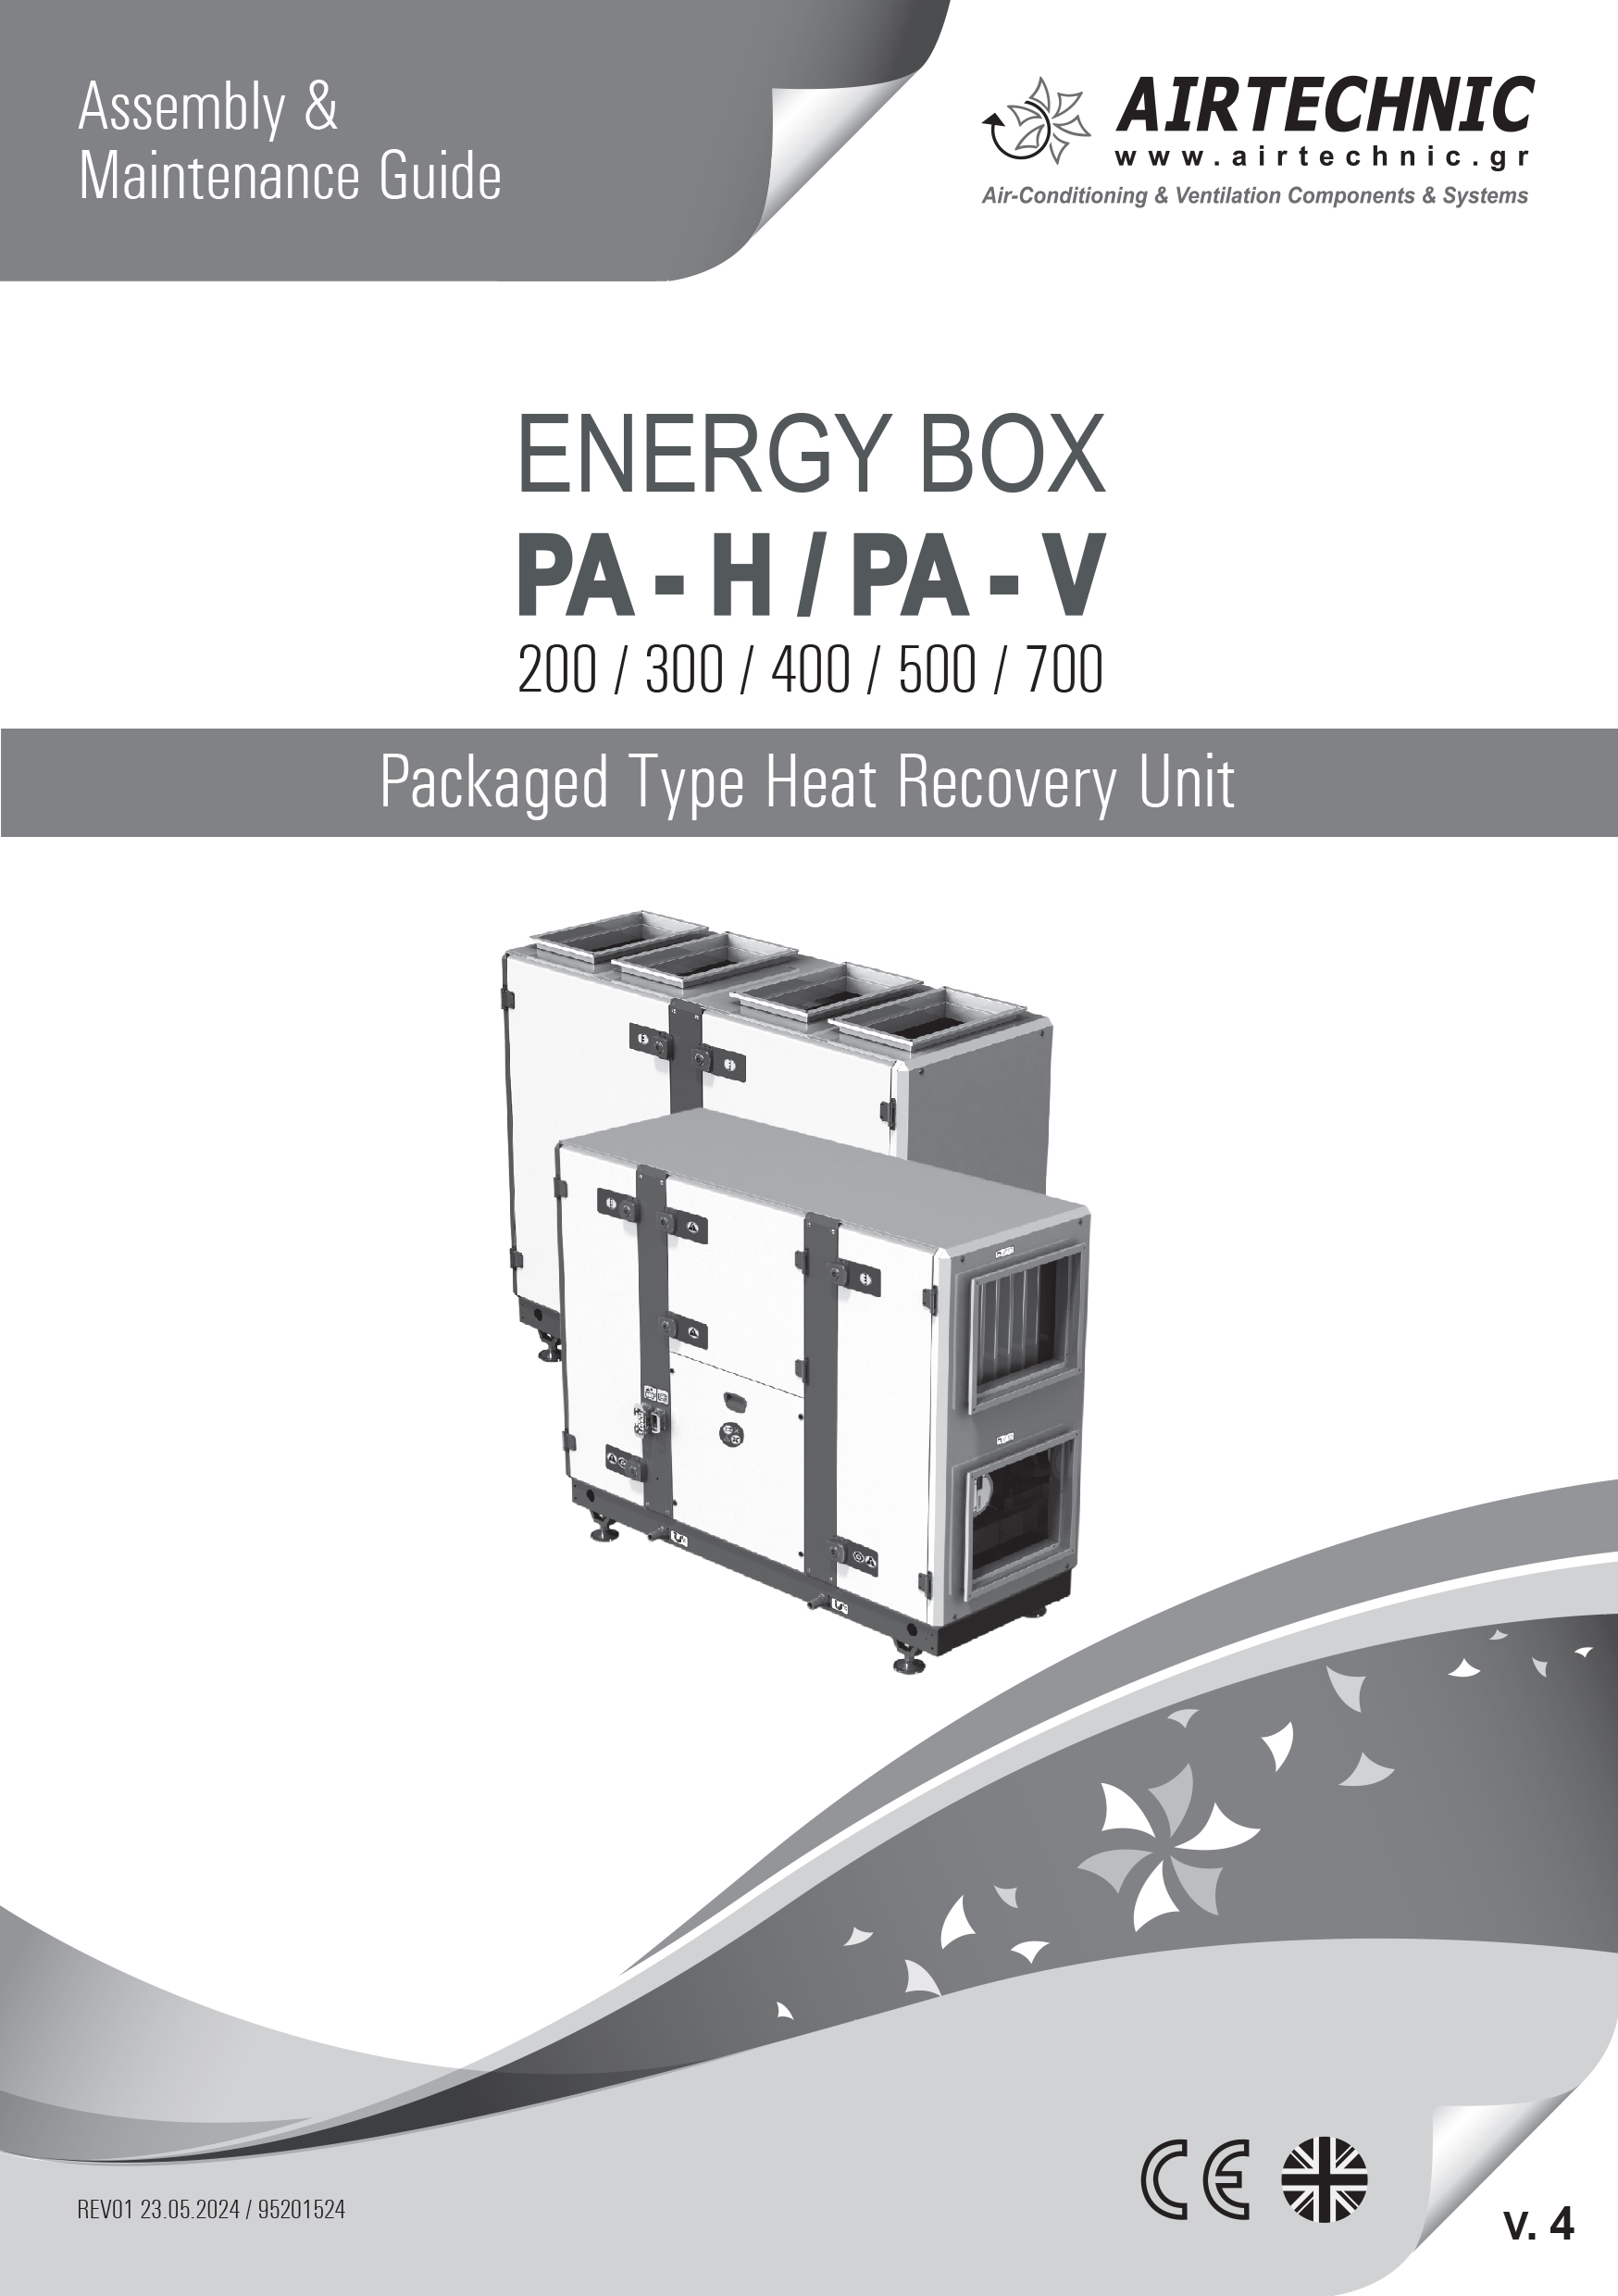 MANUAL "ENERGY BOX PA-H / PA-V"